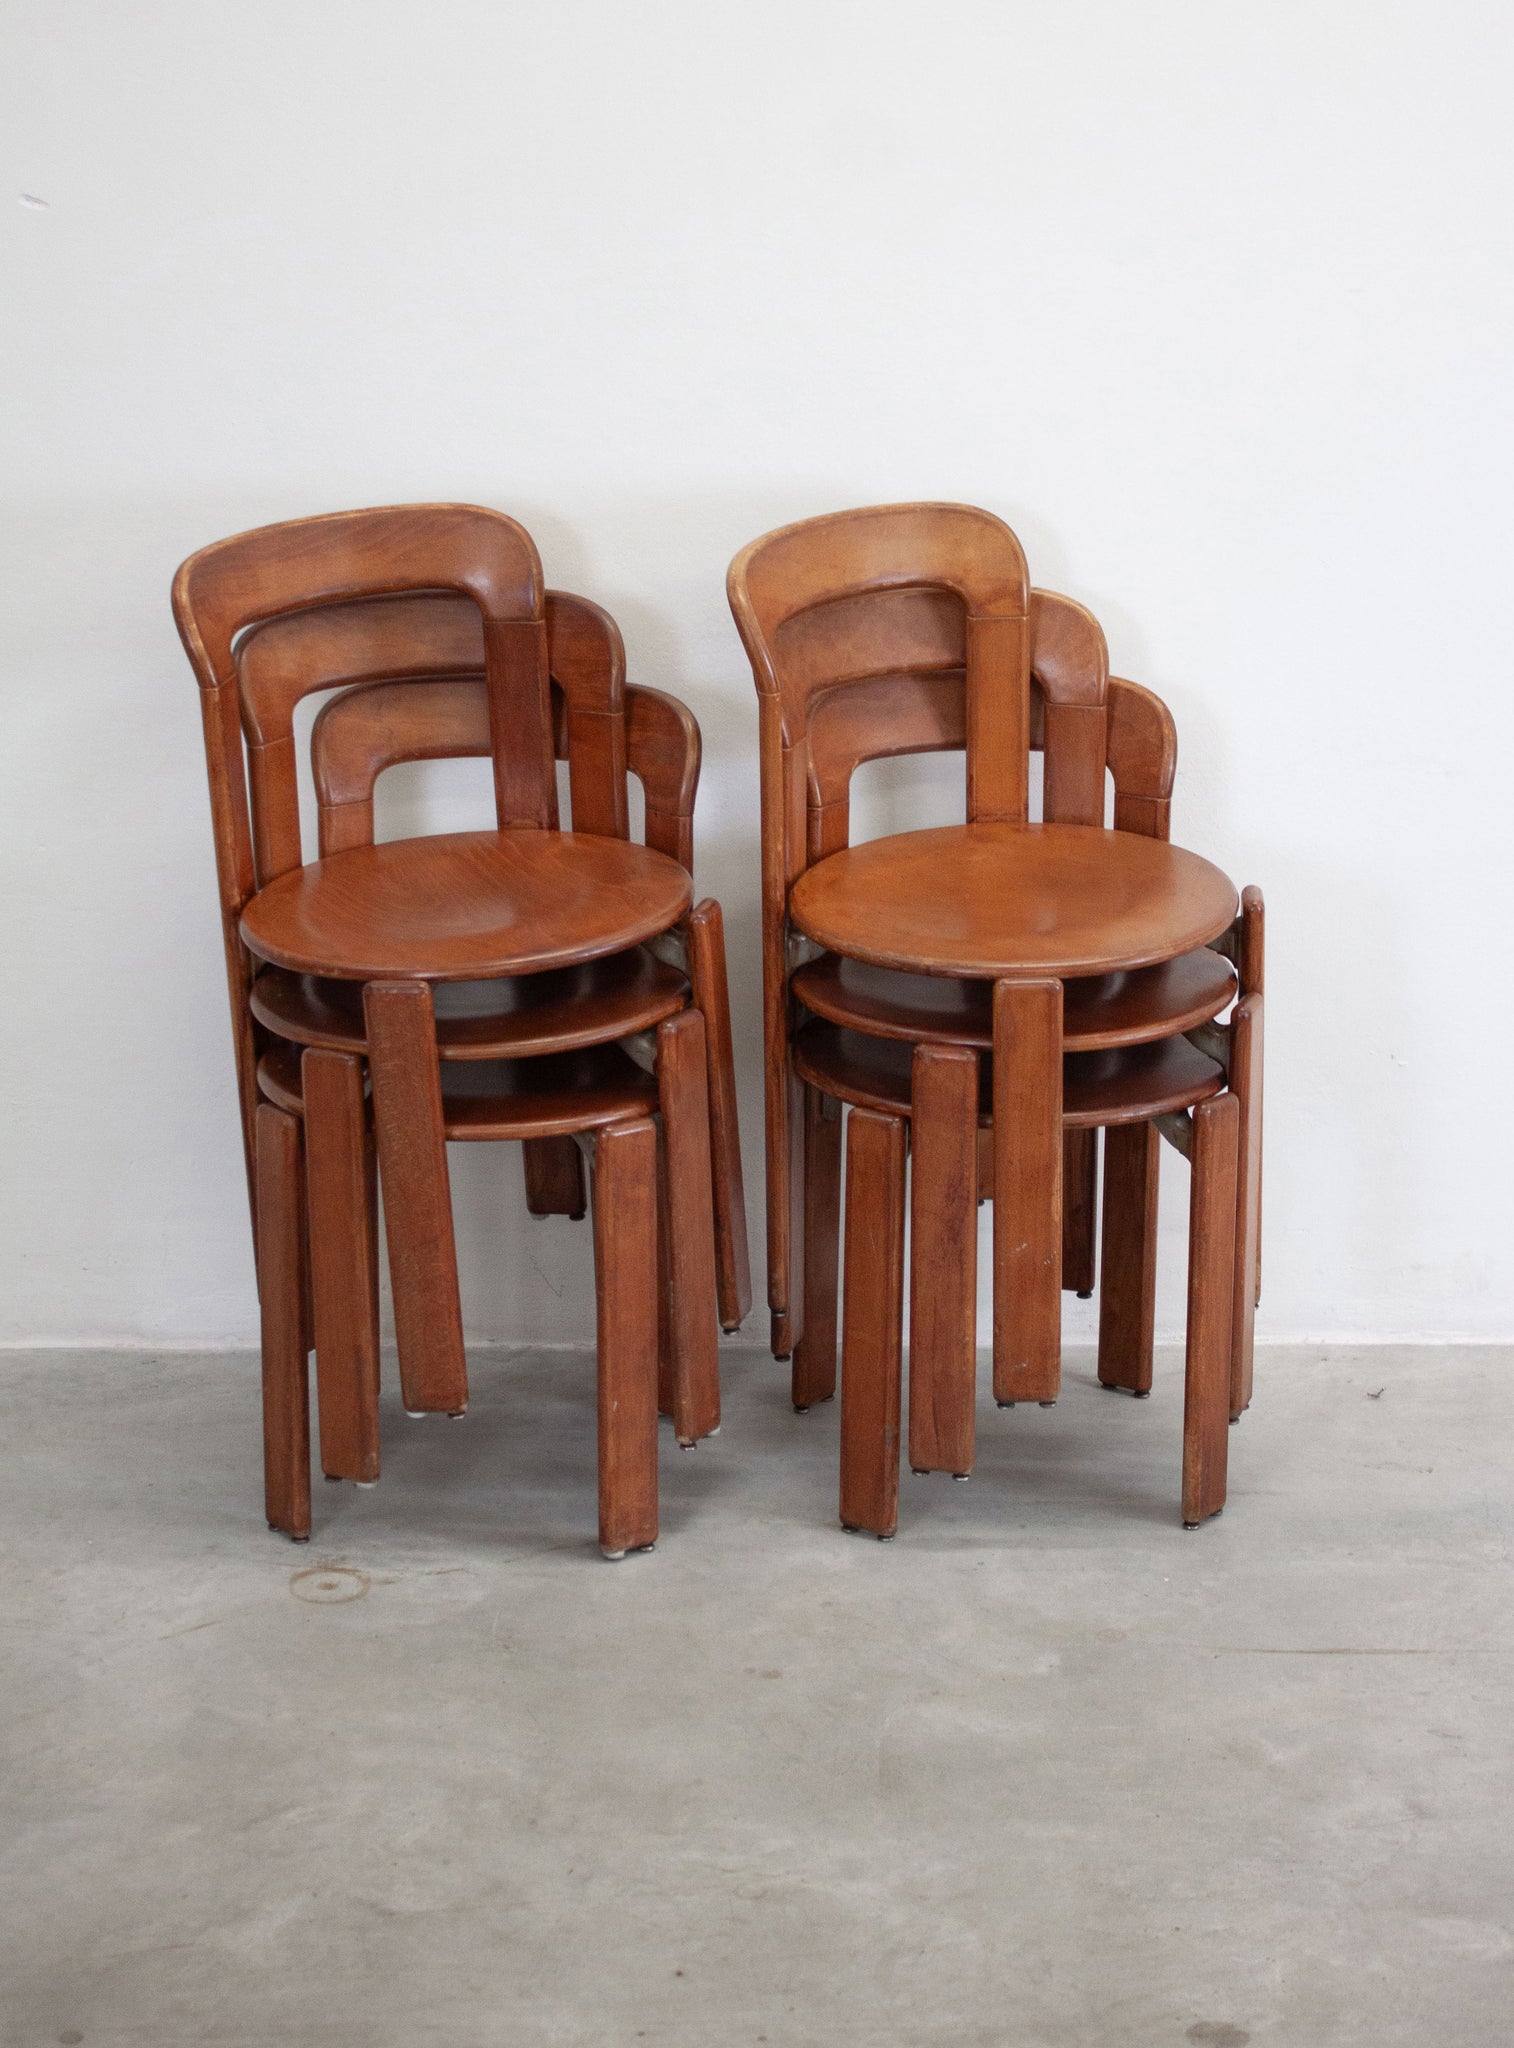 Dietiker Rey Dining Chairs by Bruno Rey (Brown)